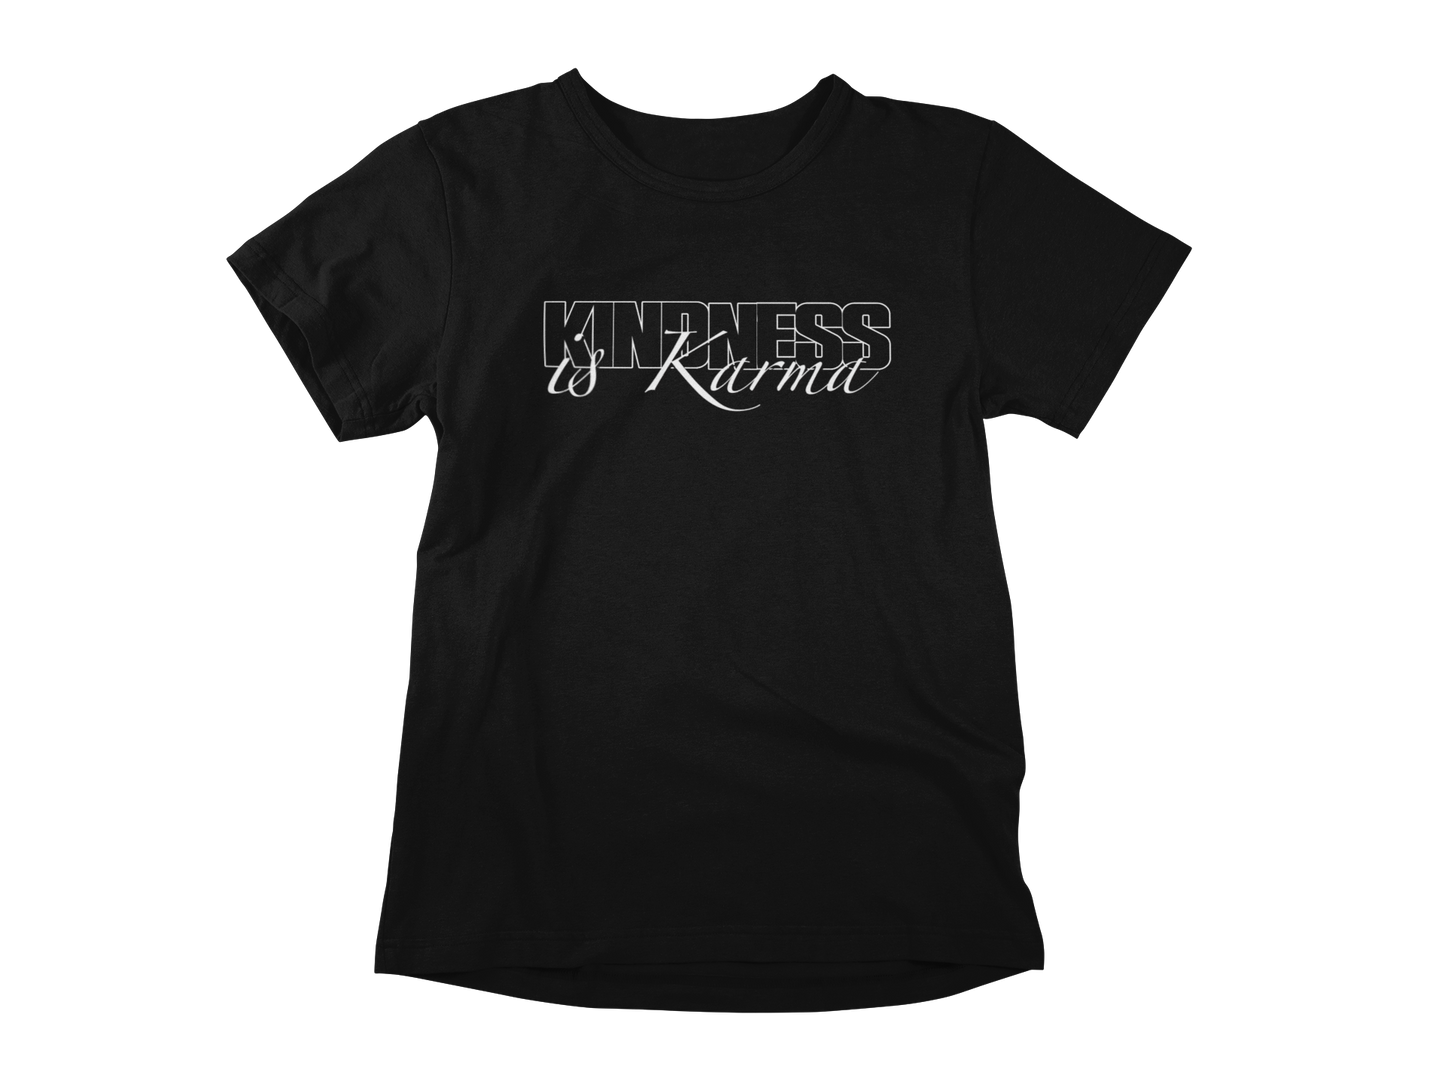 Kindness is Karma - Gary Vee Vaynerchuk quote motivational t shirt